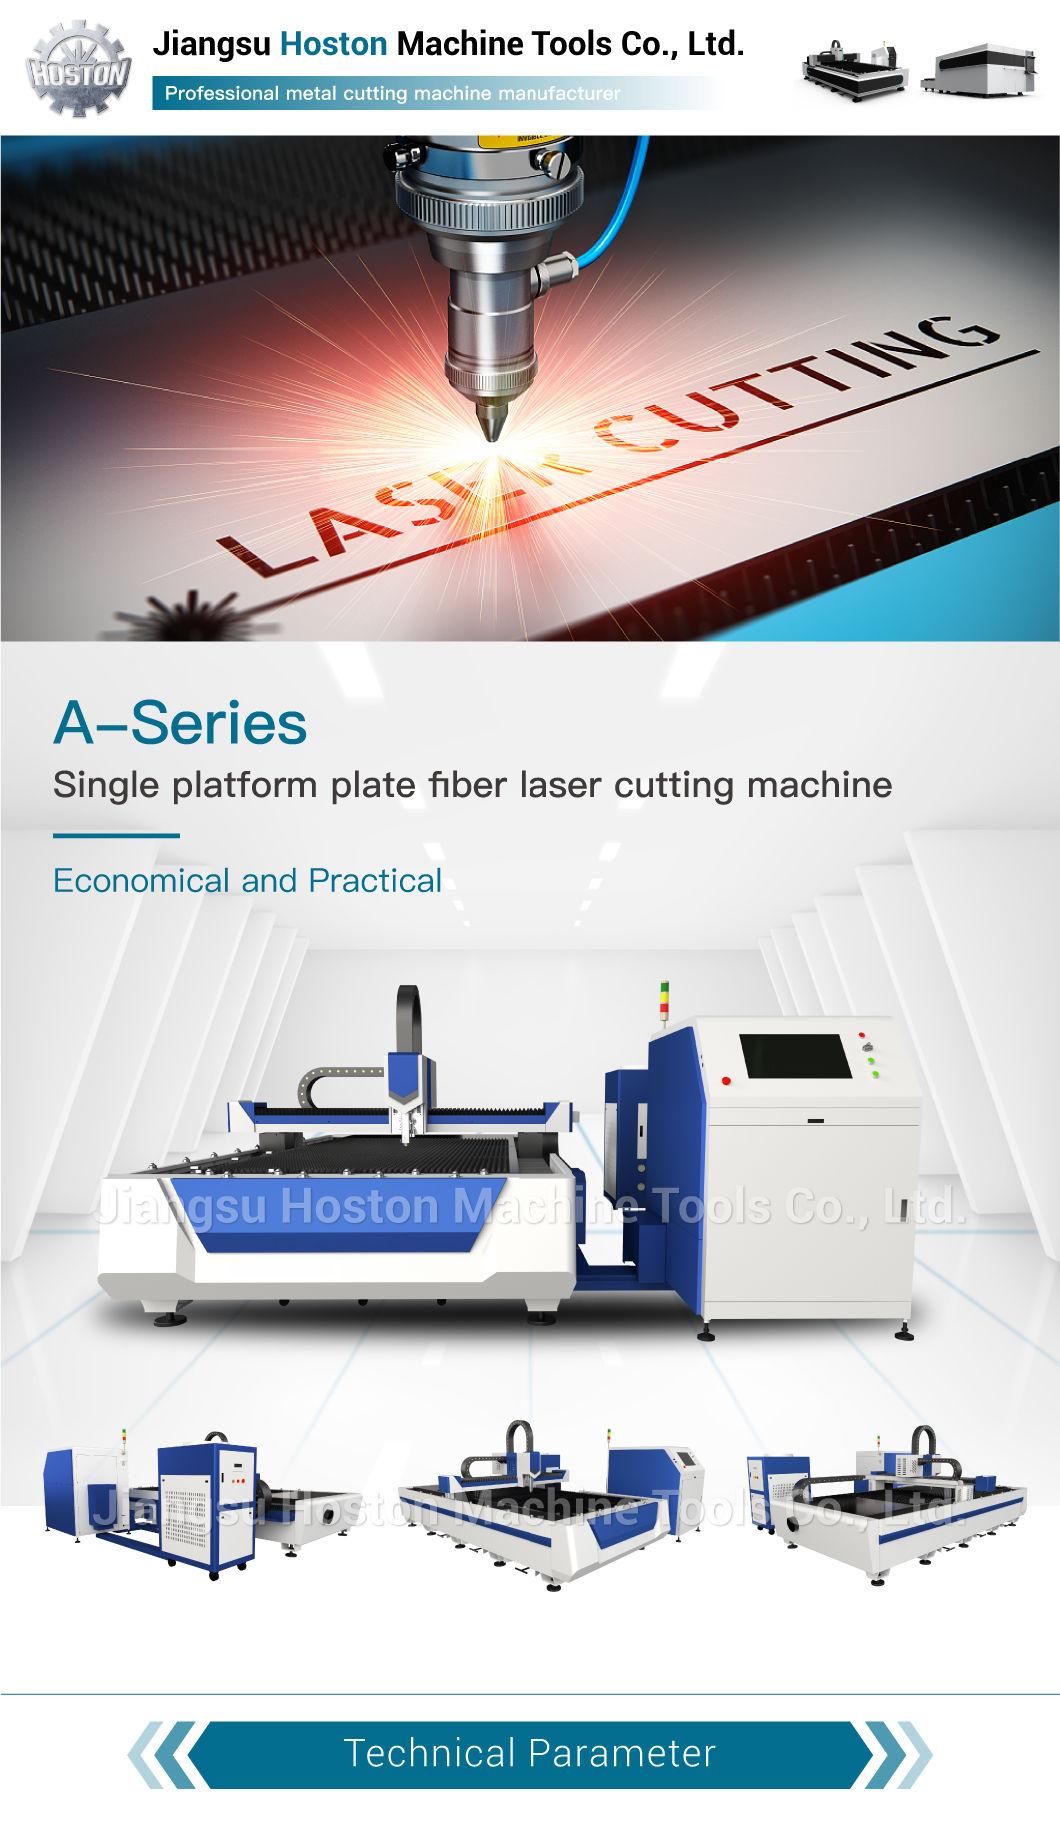 Factory Price CNC Plasma Cutter Laser Cutting Machine with CE Certificate